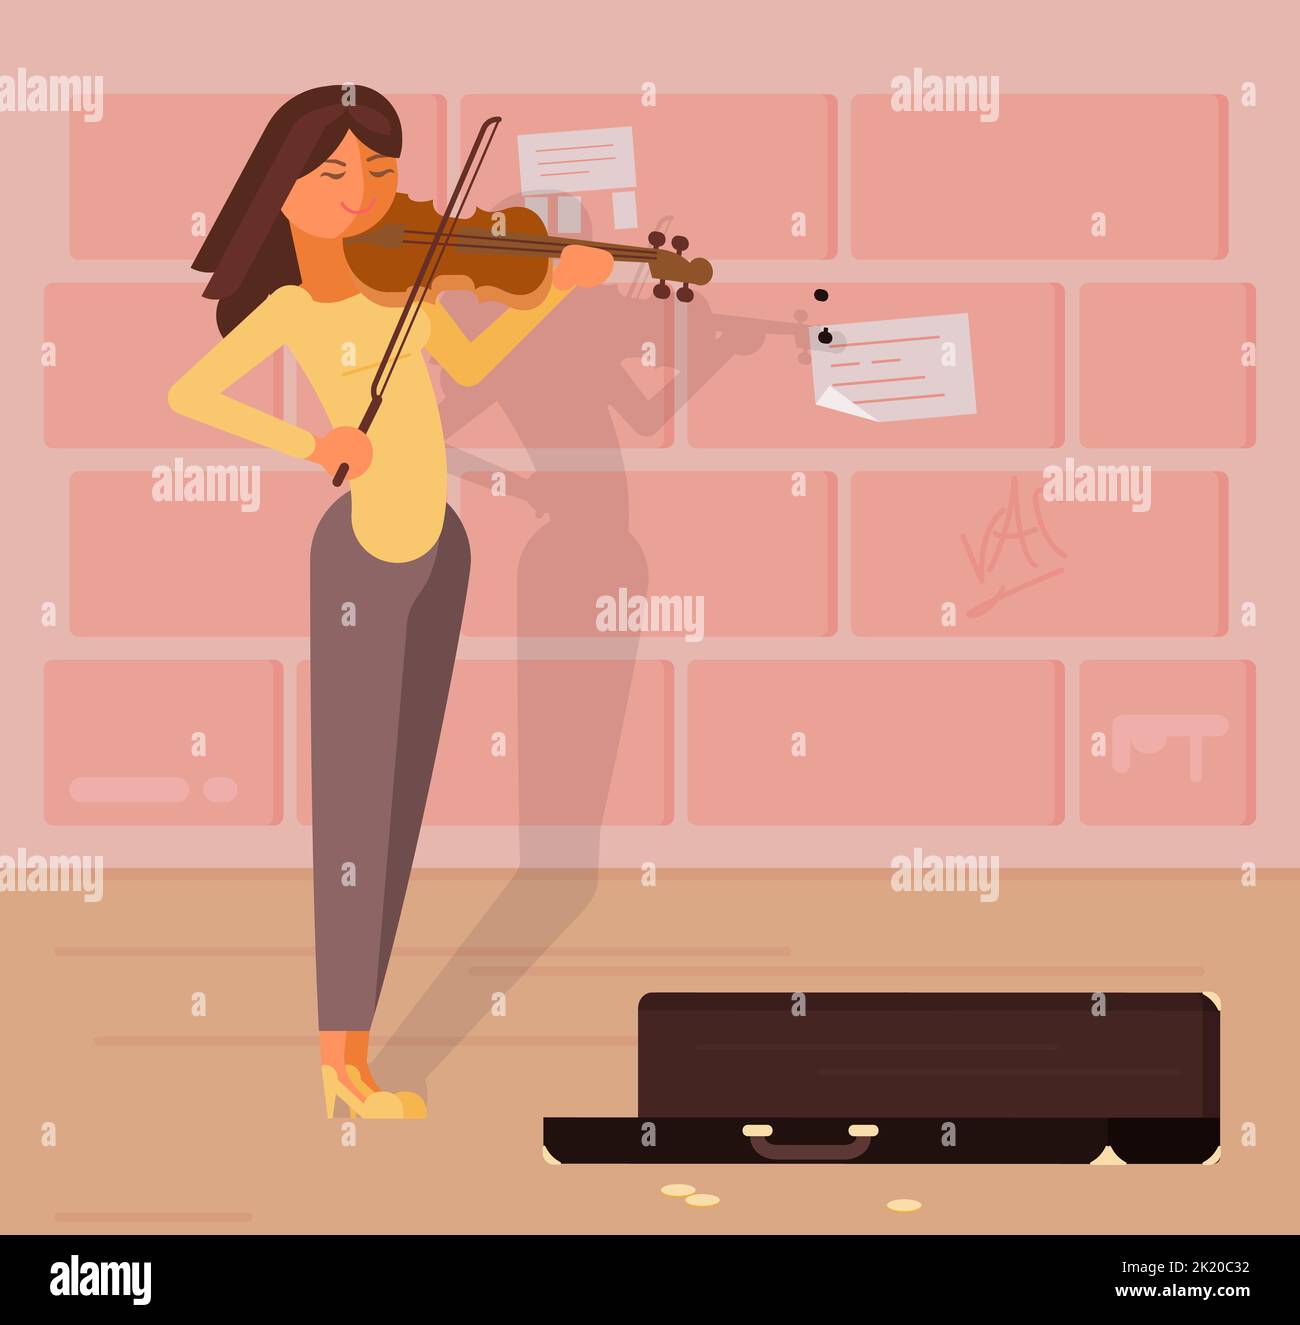 Vector illustration of street musician with violin Stock Vector